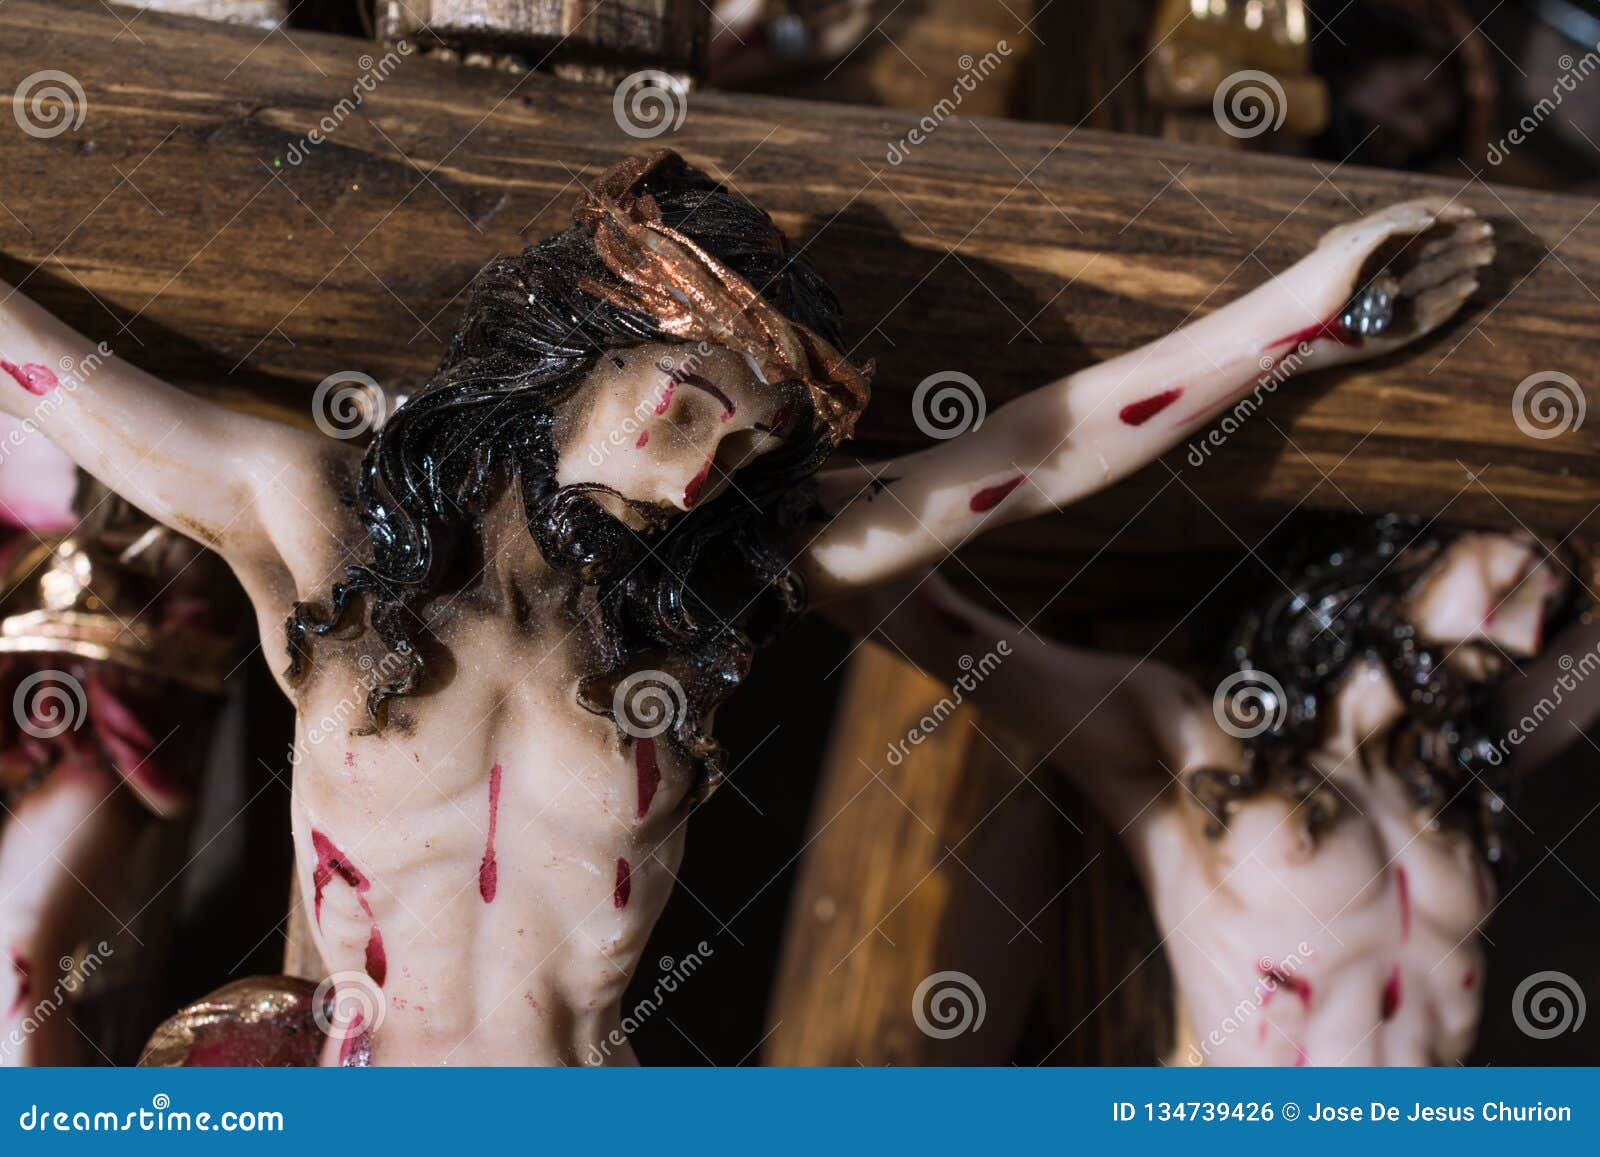 close-up of jesus christ on the cross.